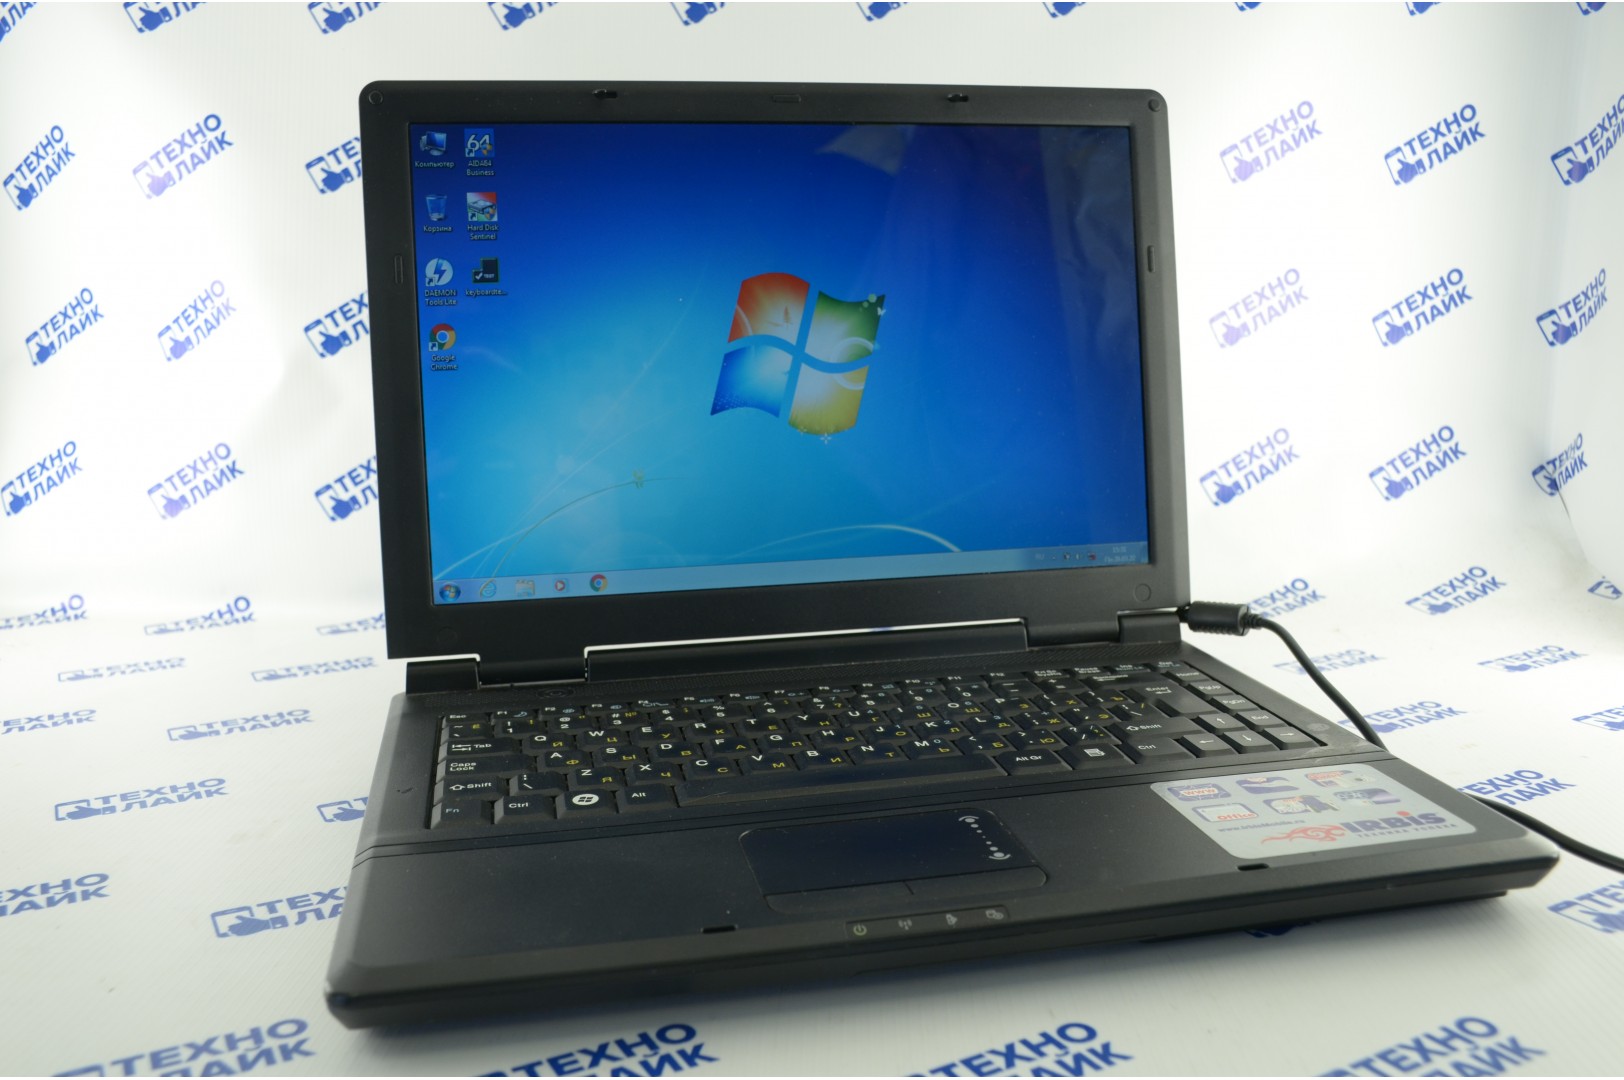 Intel gma x3100. Acer 4220. Ноутбук Windows XP Pro Acer Extensa 5520. Ирбис l41is.